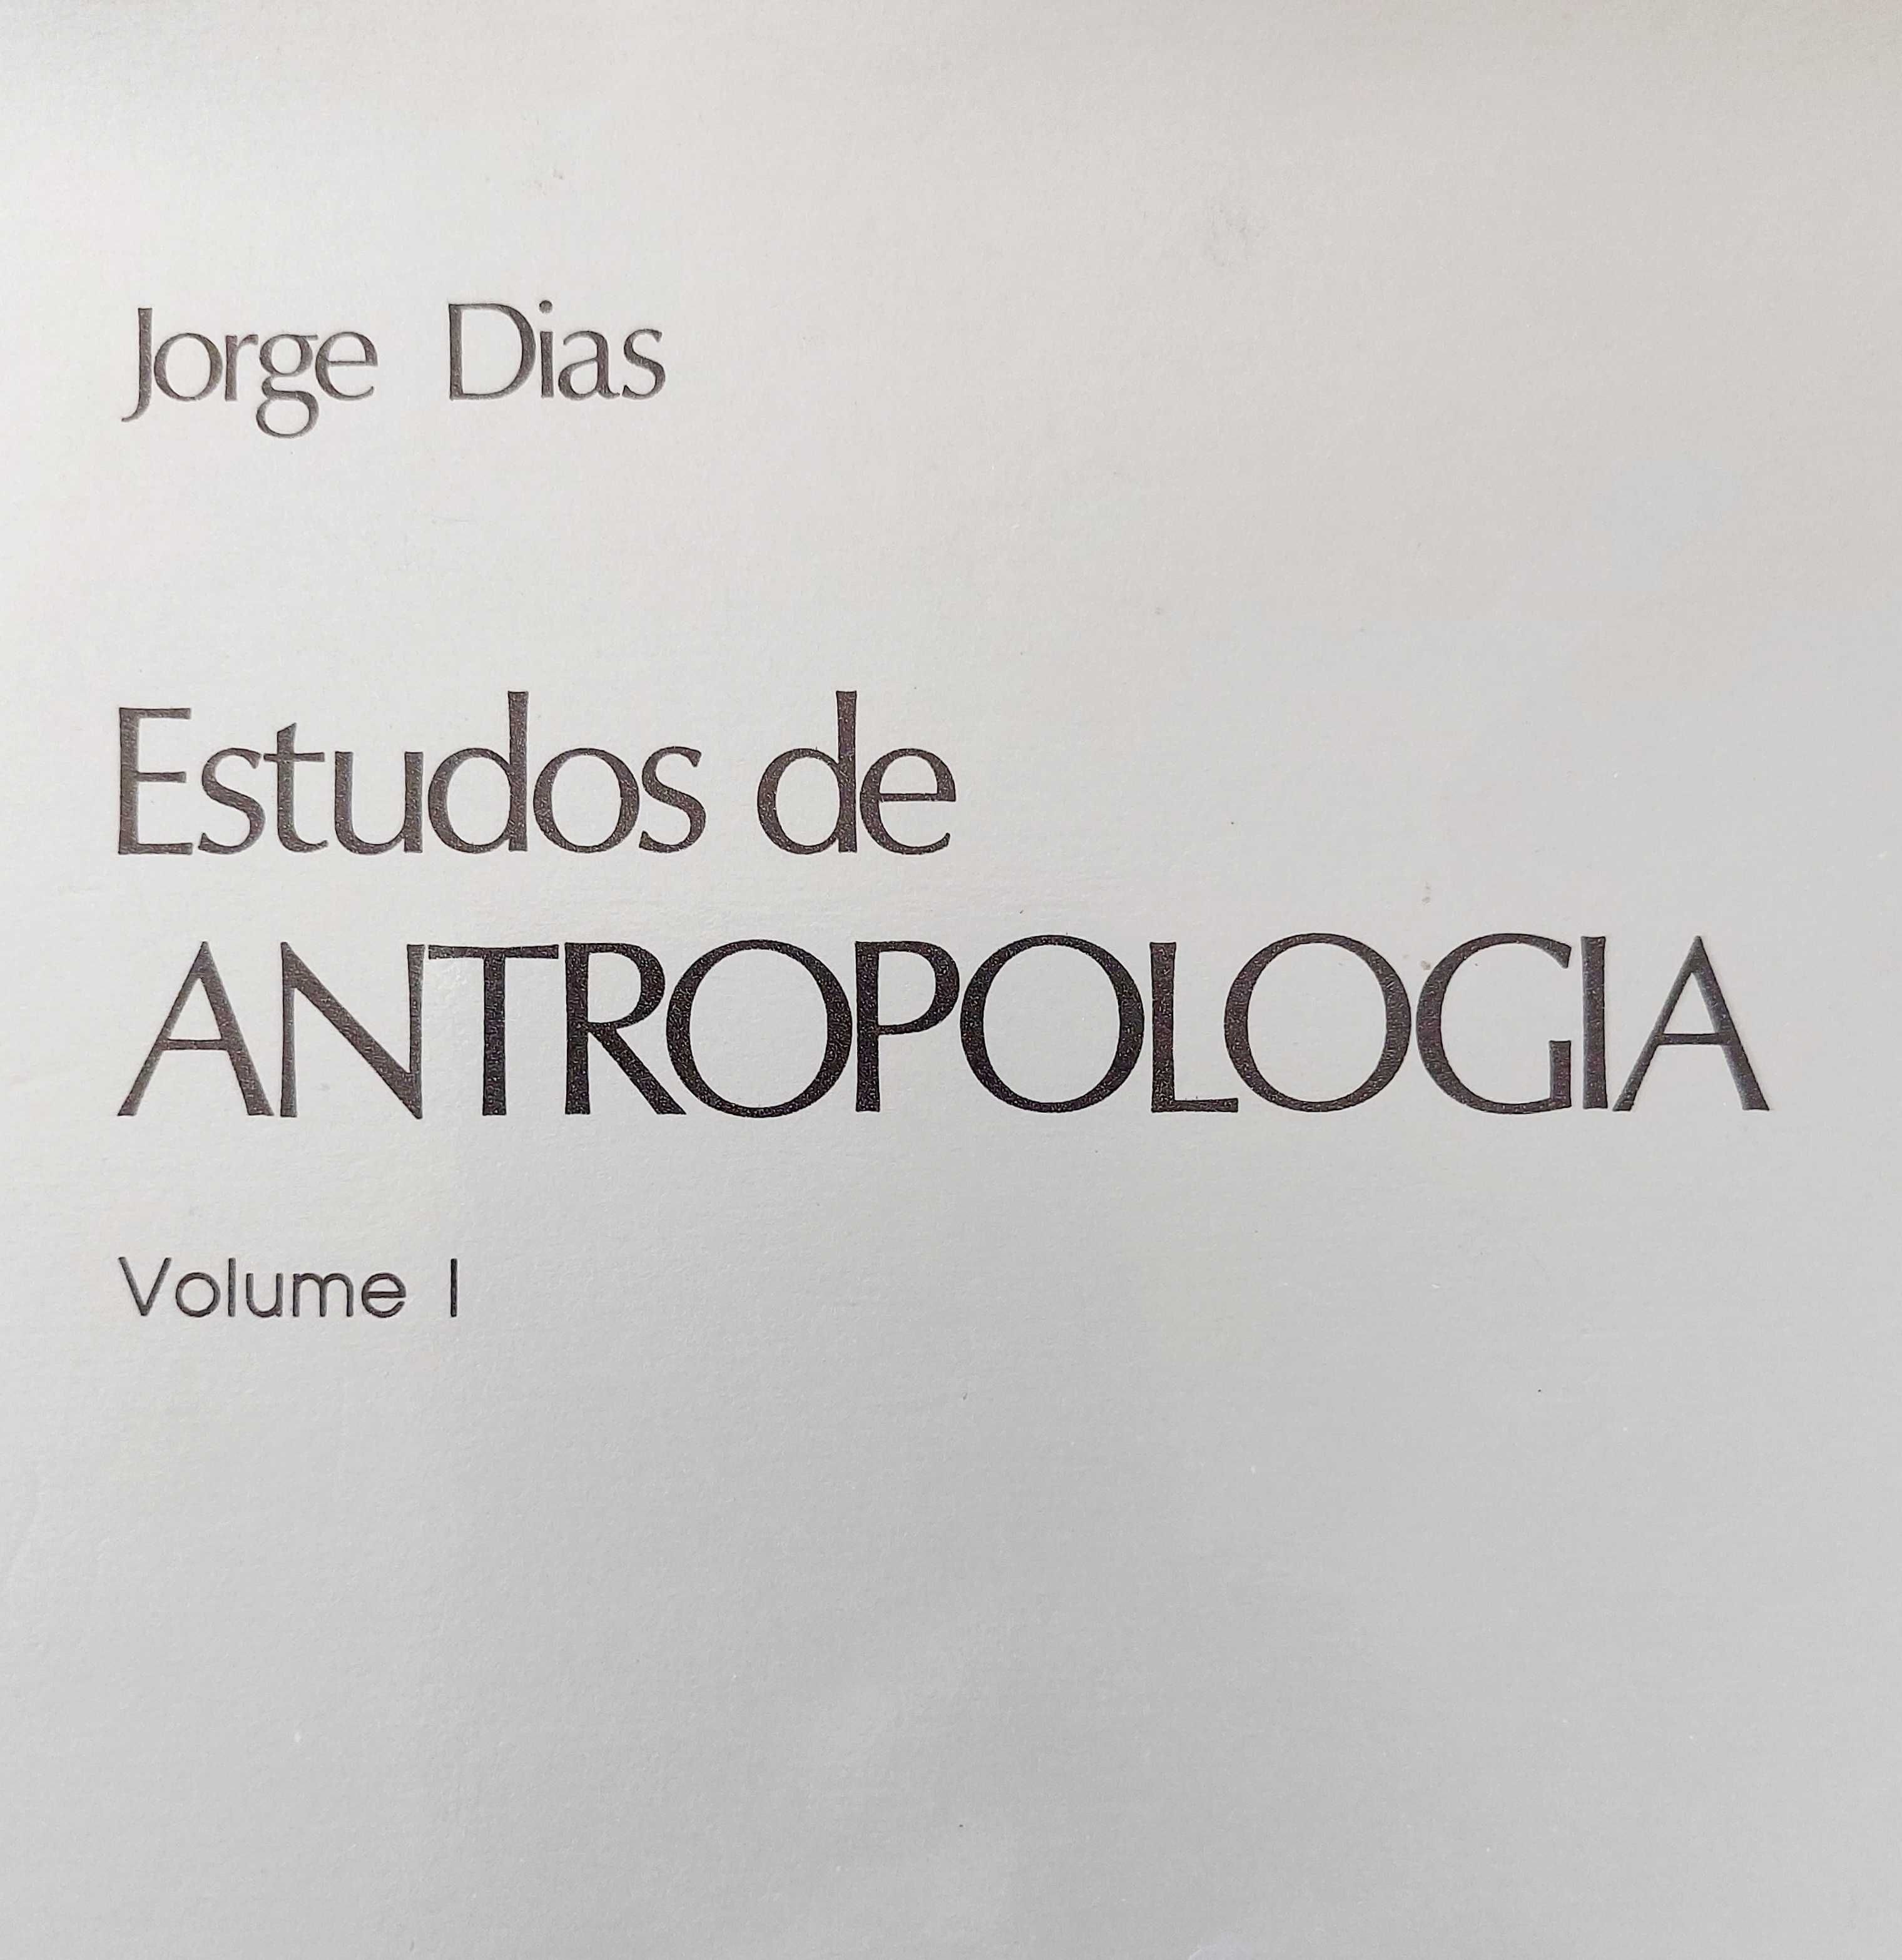 Jorge Dias Estudos ANTROPOLOGIA